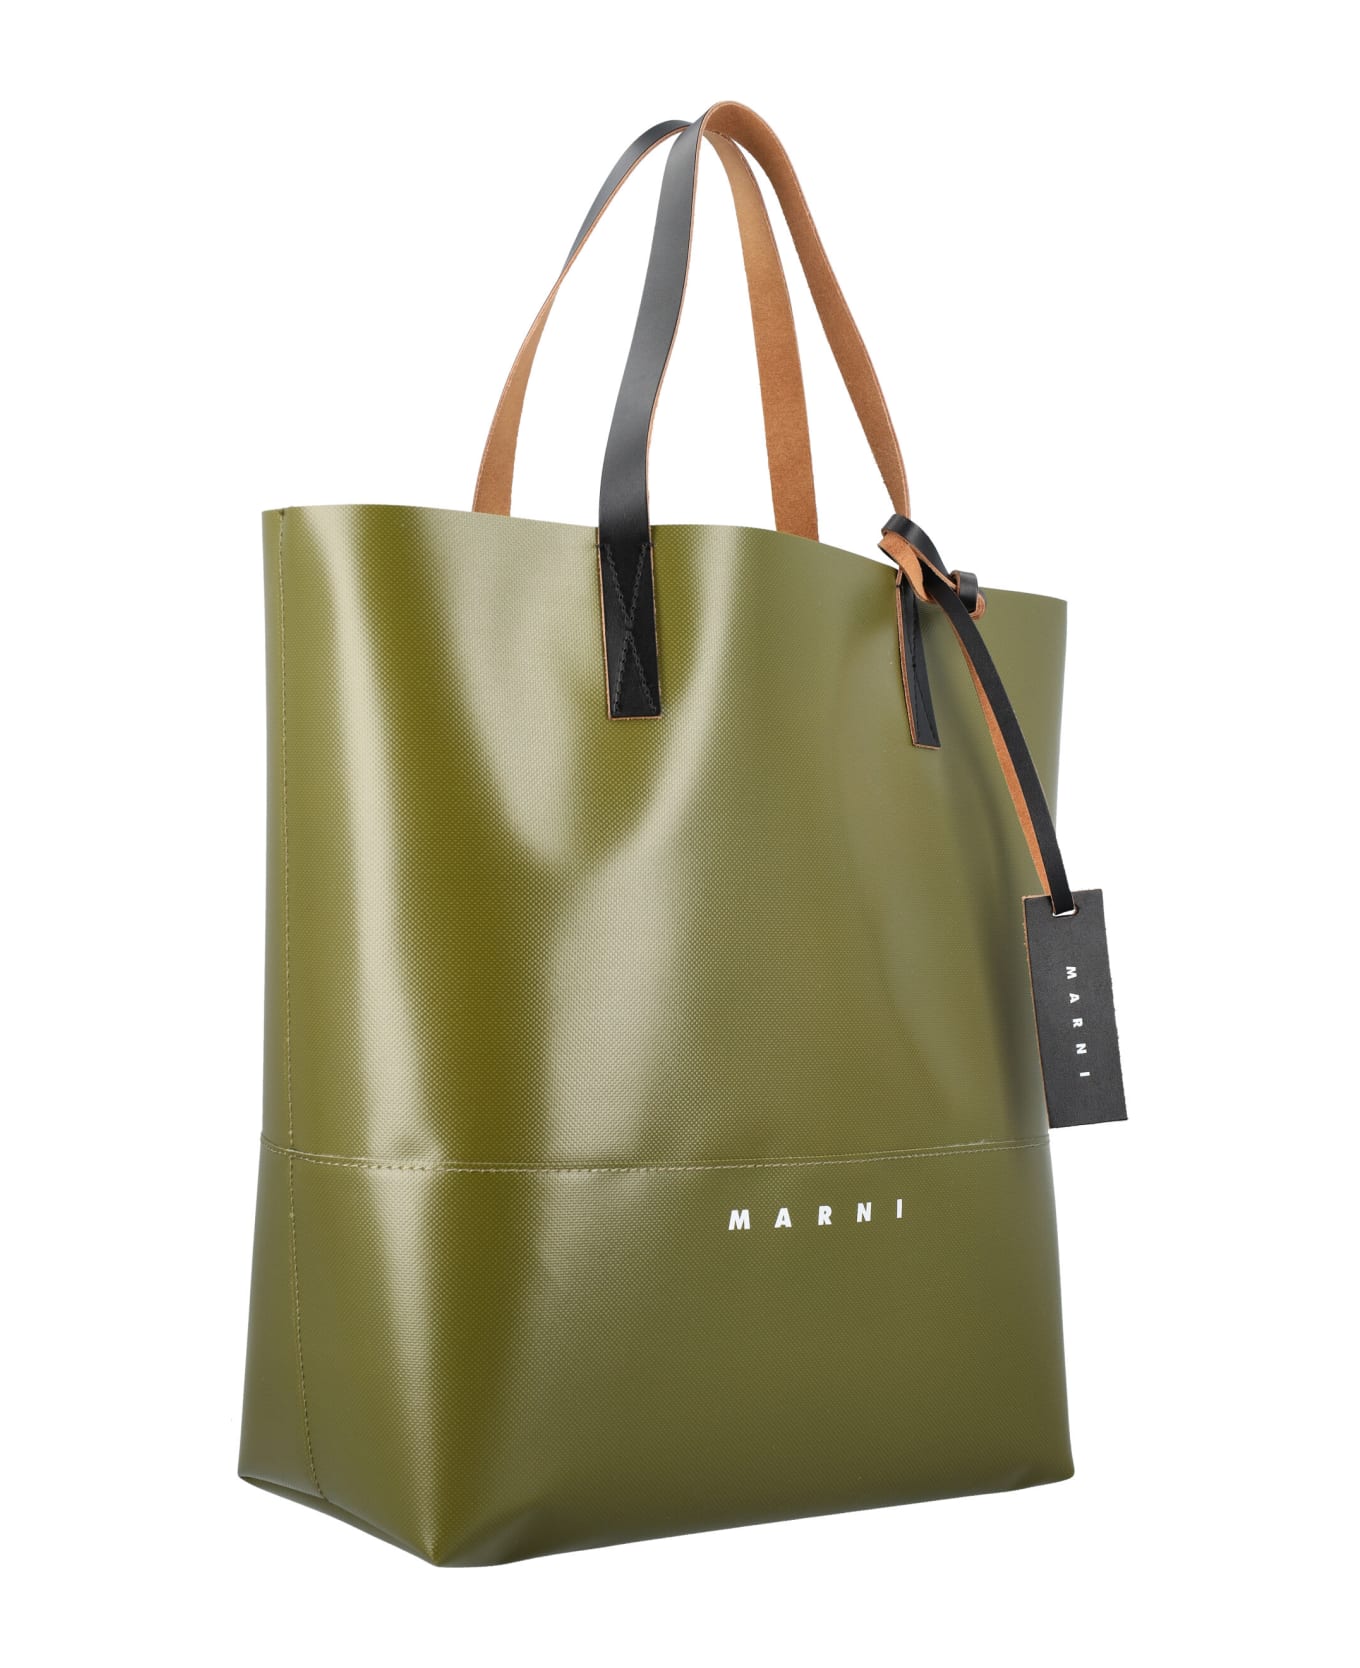 Marni Tribeca Shopping Bag - MILITARY GREEN